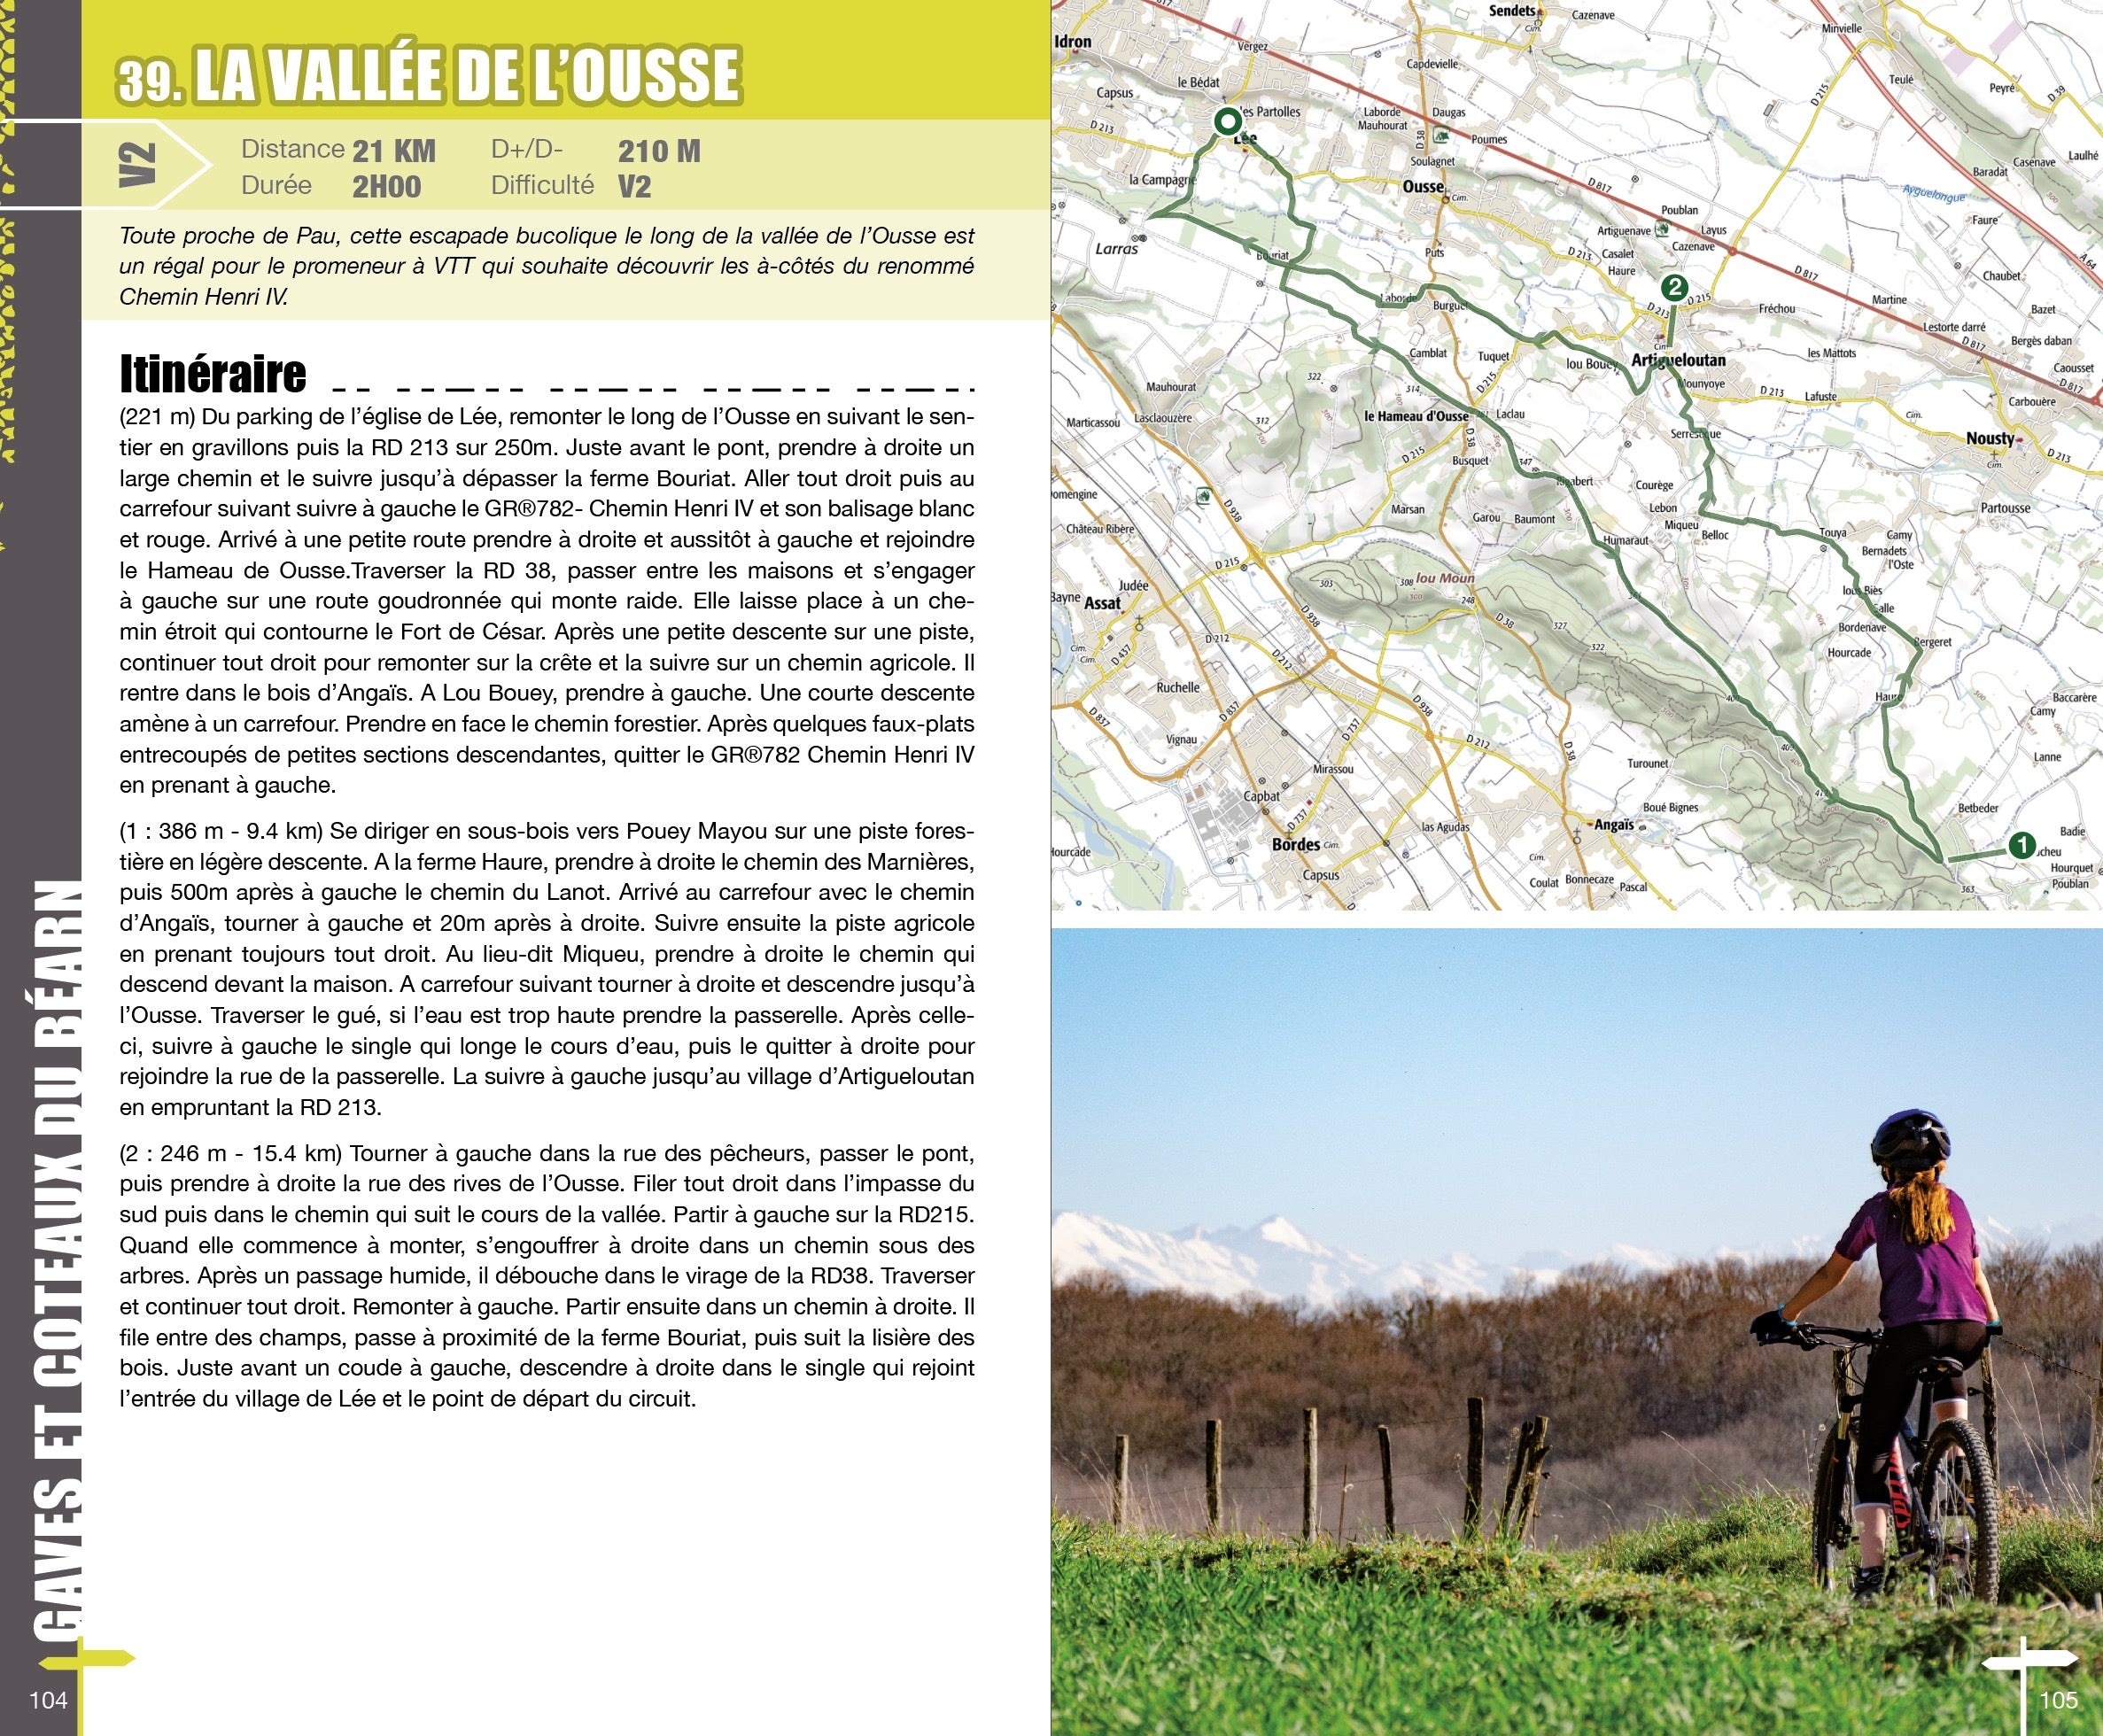 VTOPO MTB Pyrénées-Atlantiques - 2nd edition